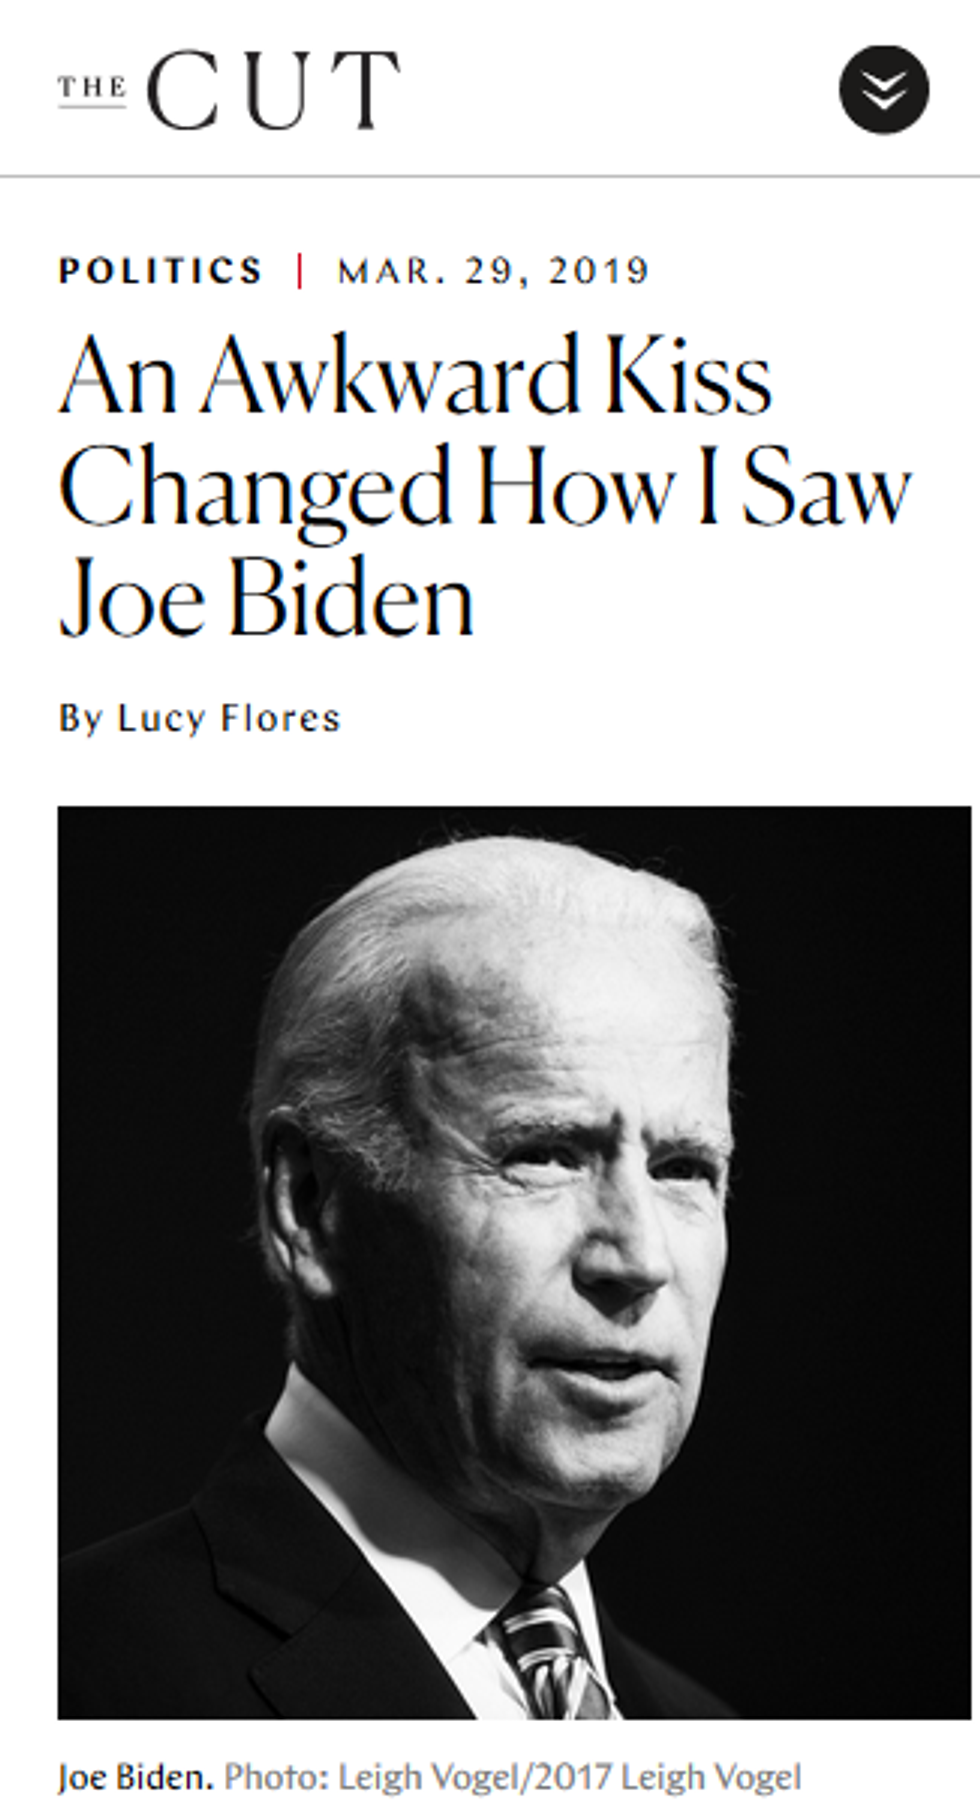 The Cut: An Awkward Kiss Changed How I Saw Joe Biden